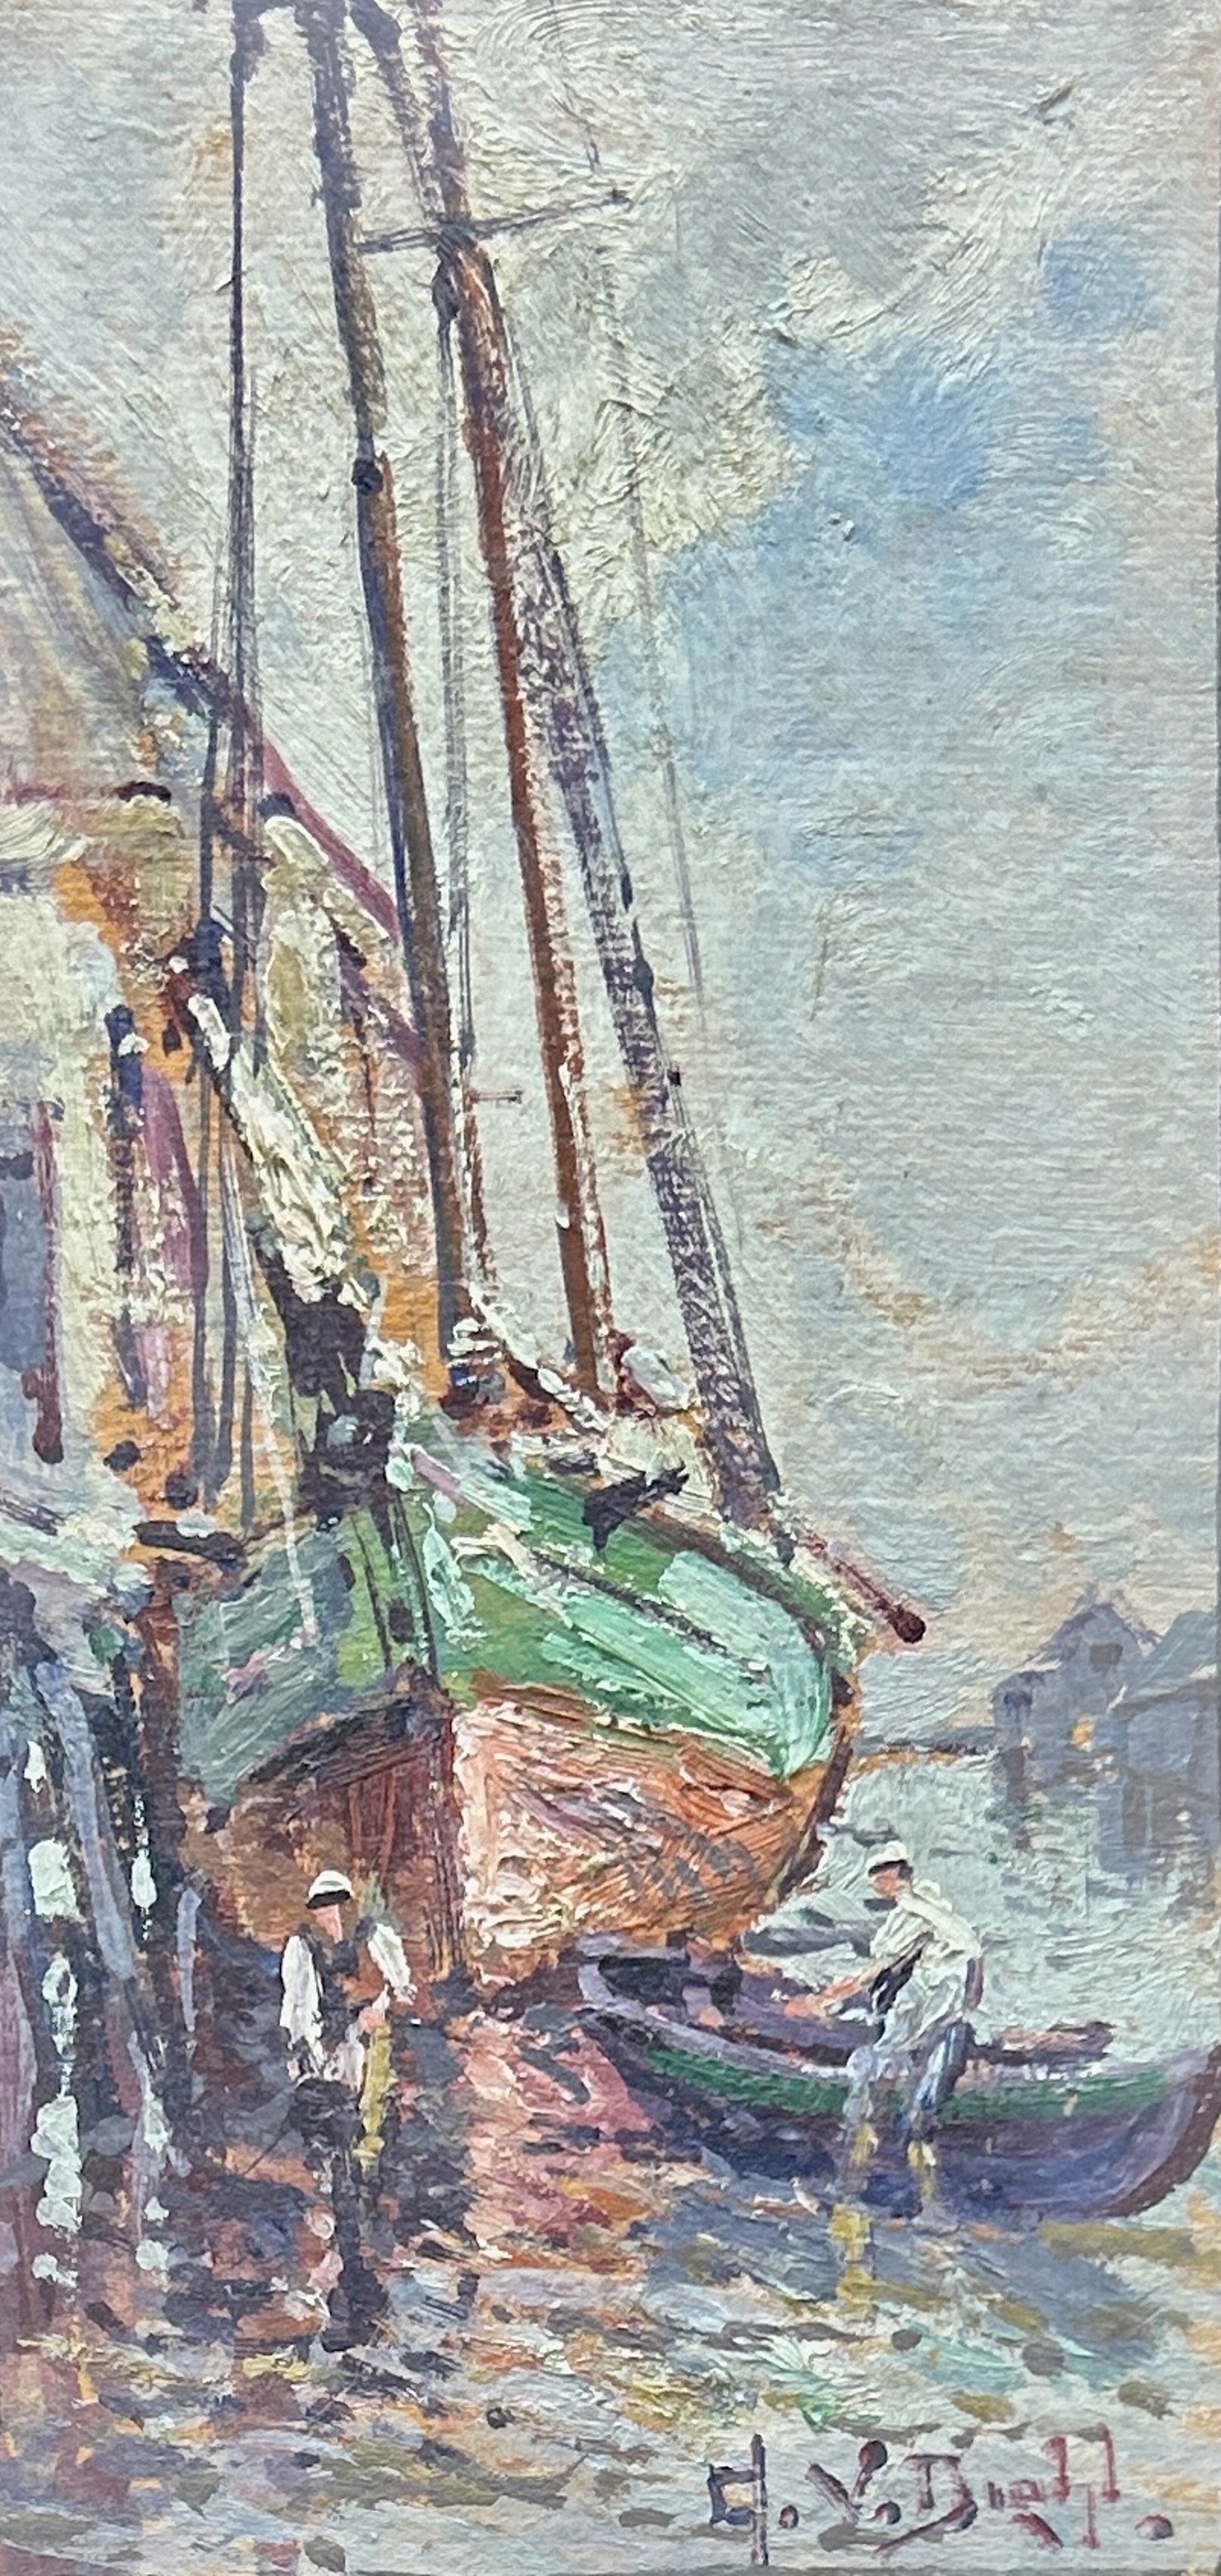 Boat at Dock by Arthur Diehl